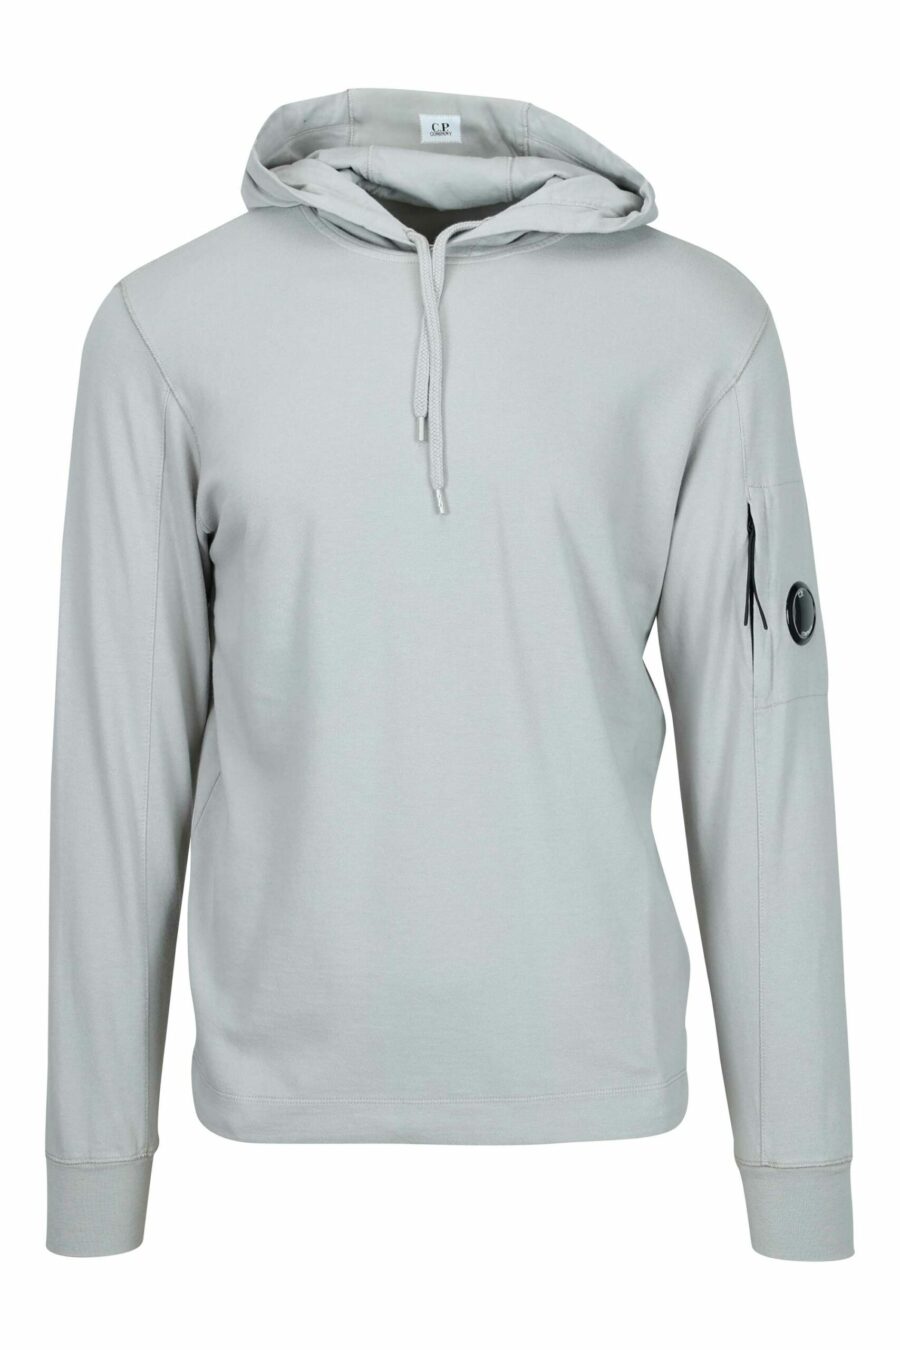 Grey hooded sweatshirt with mini-logo lens pocket - 7620943681031 scaled